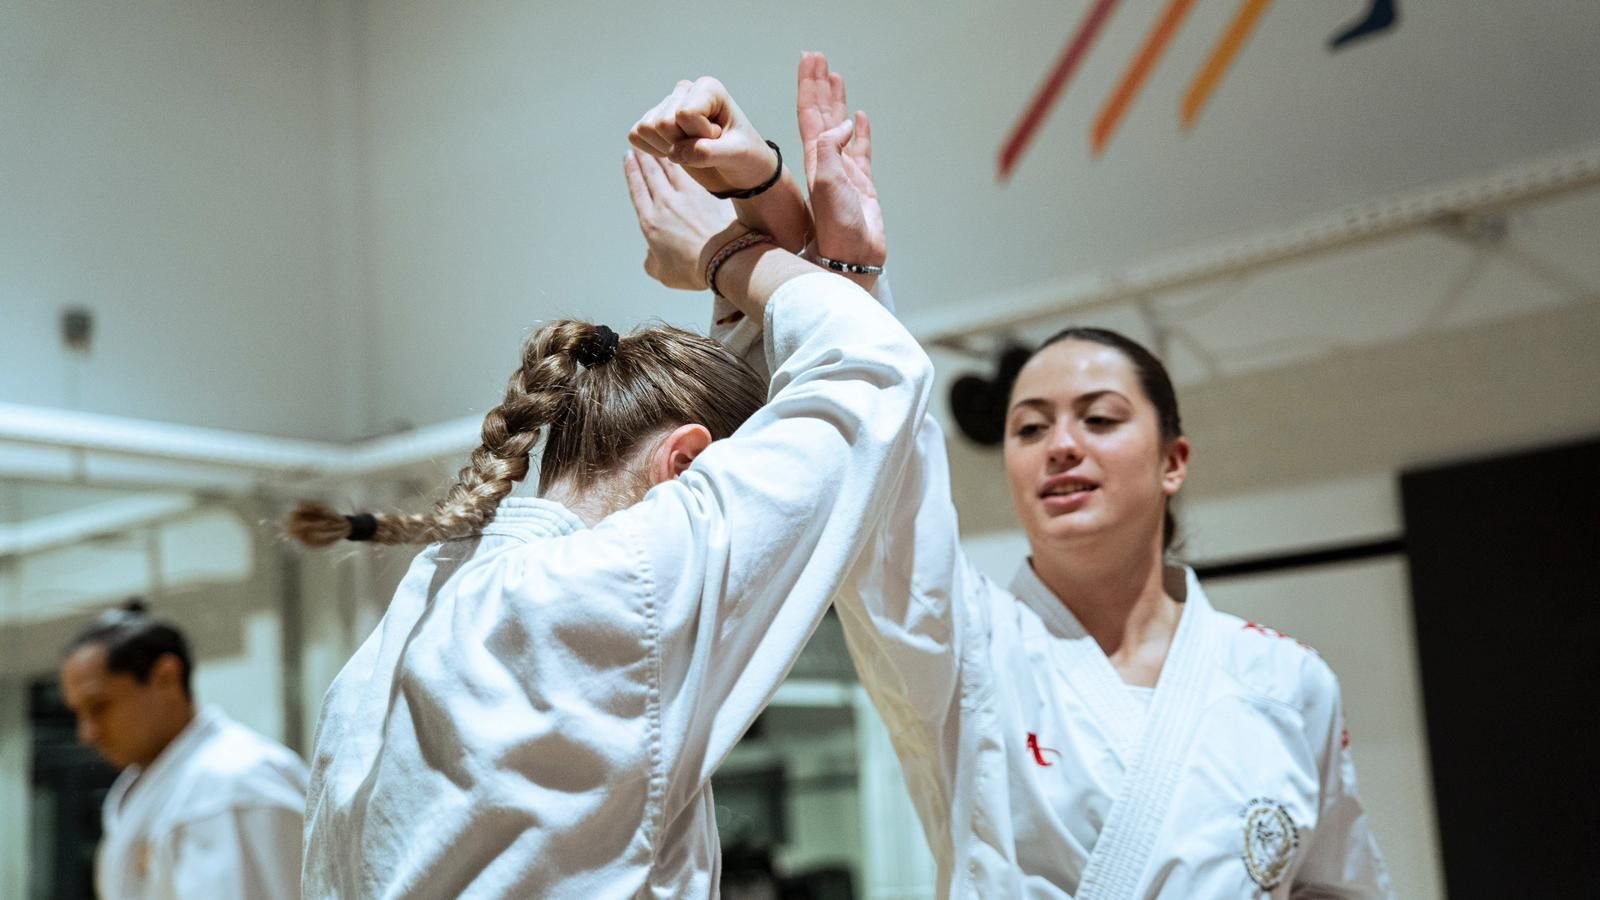 Clases de karate femenino.